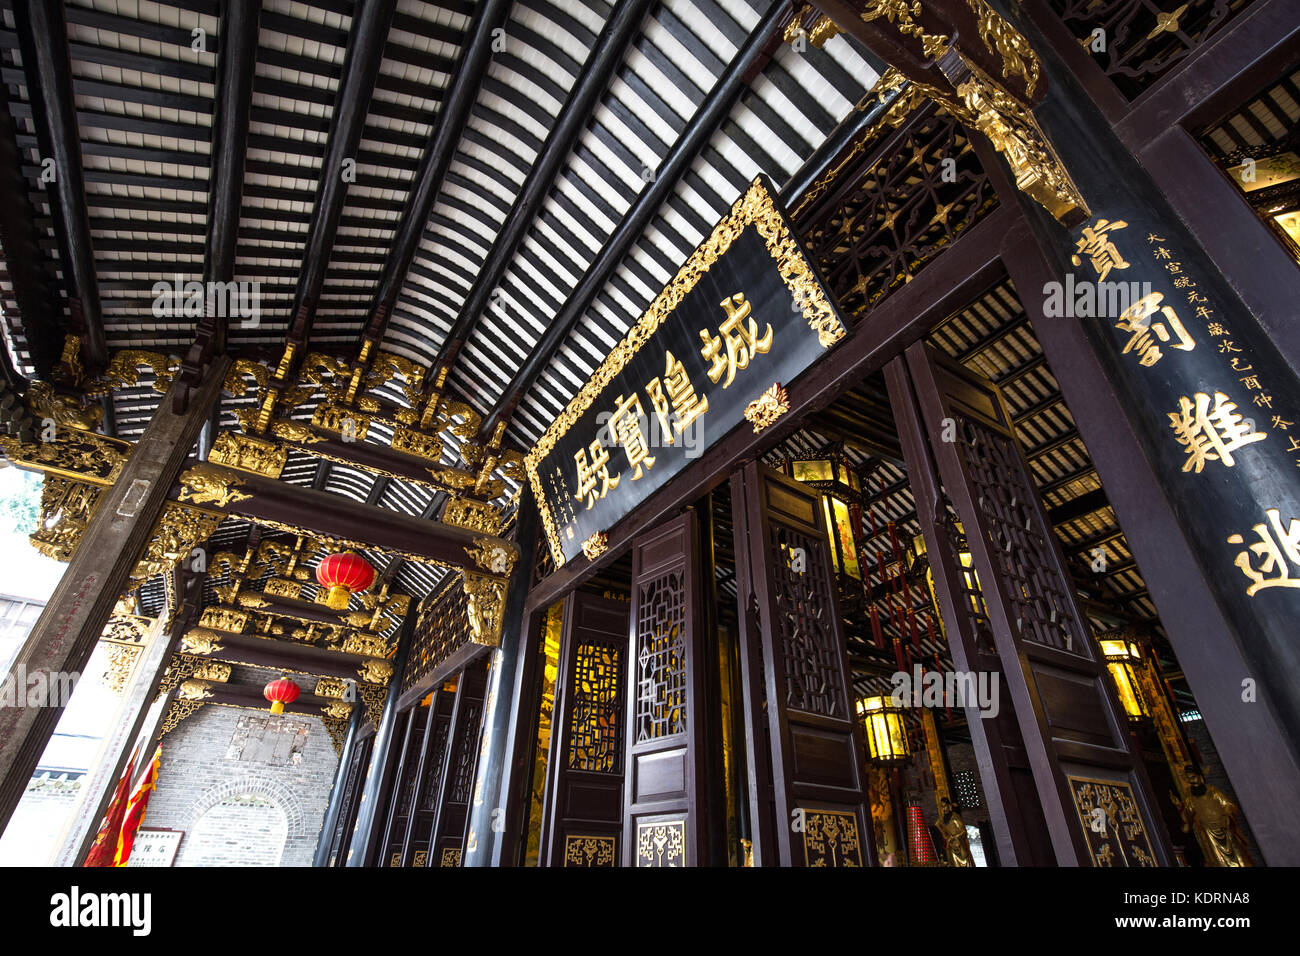 Guangzhou,China - february,10,2015:Cheng huang temple is the famous temple in guangzhou china. Stock Photo